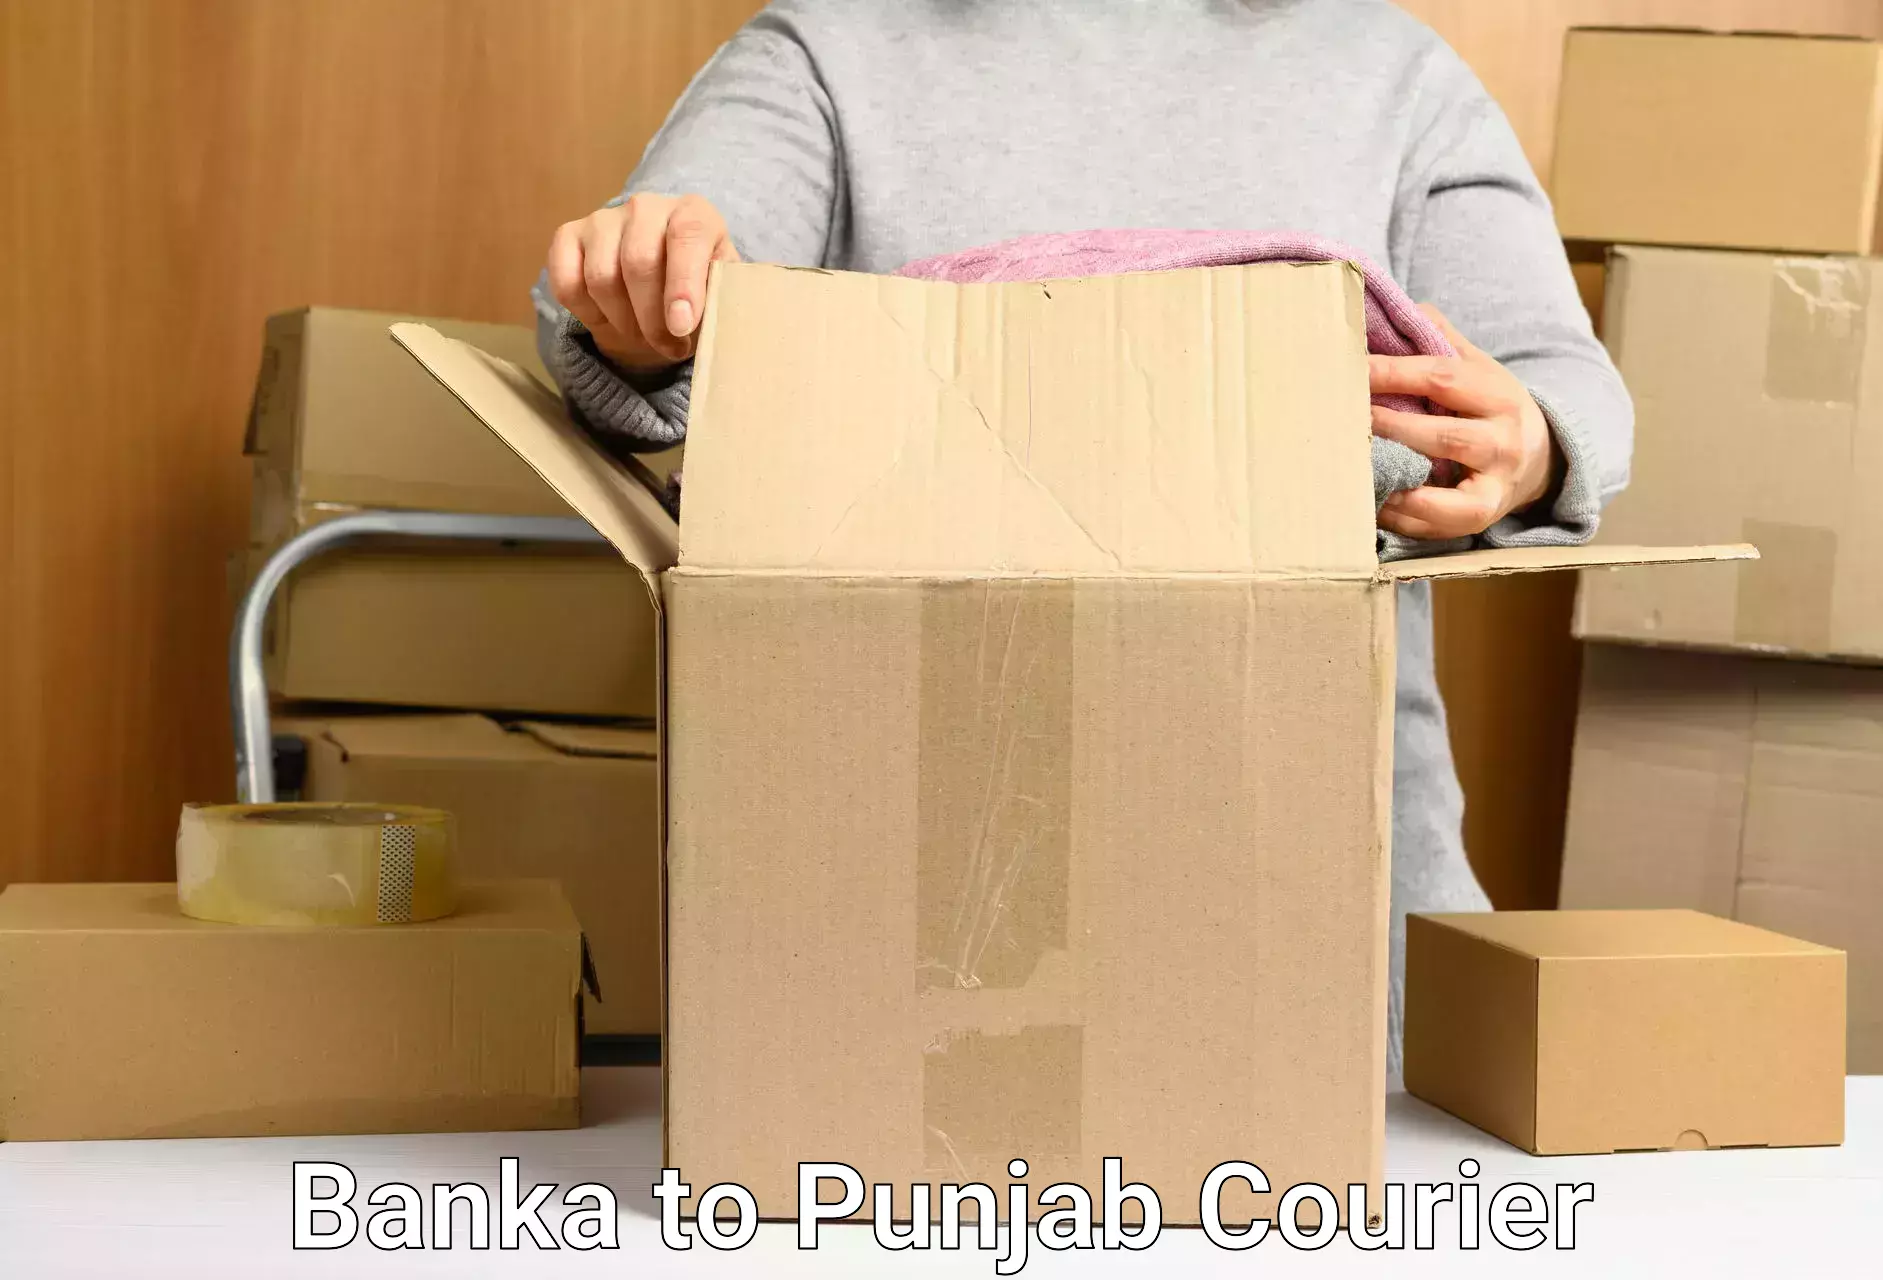 Express logistics providers Banka to Punjab